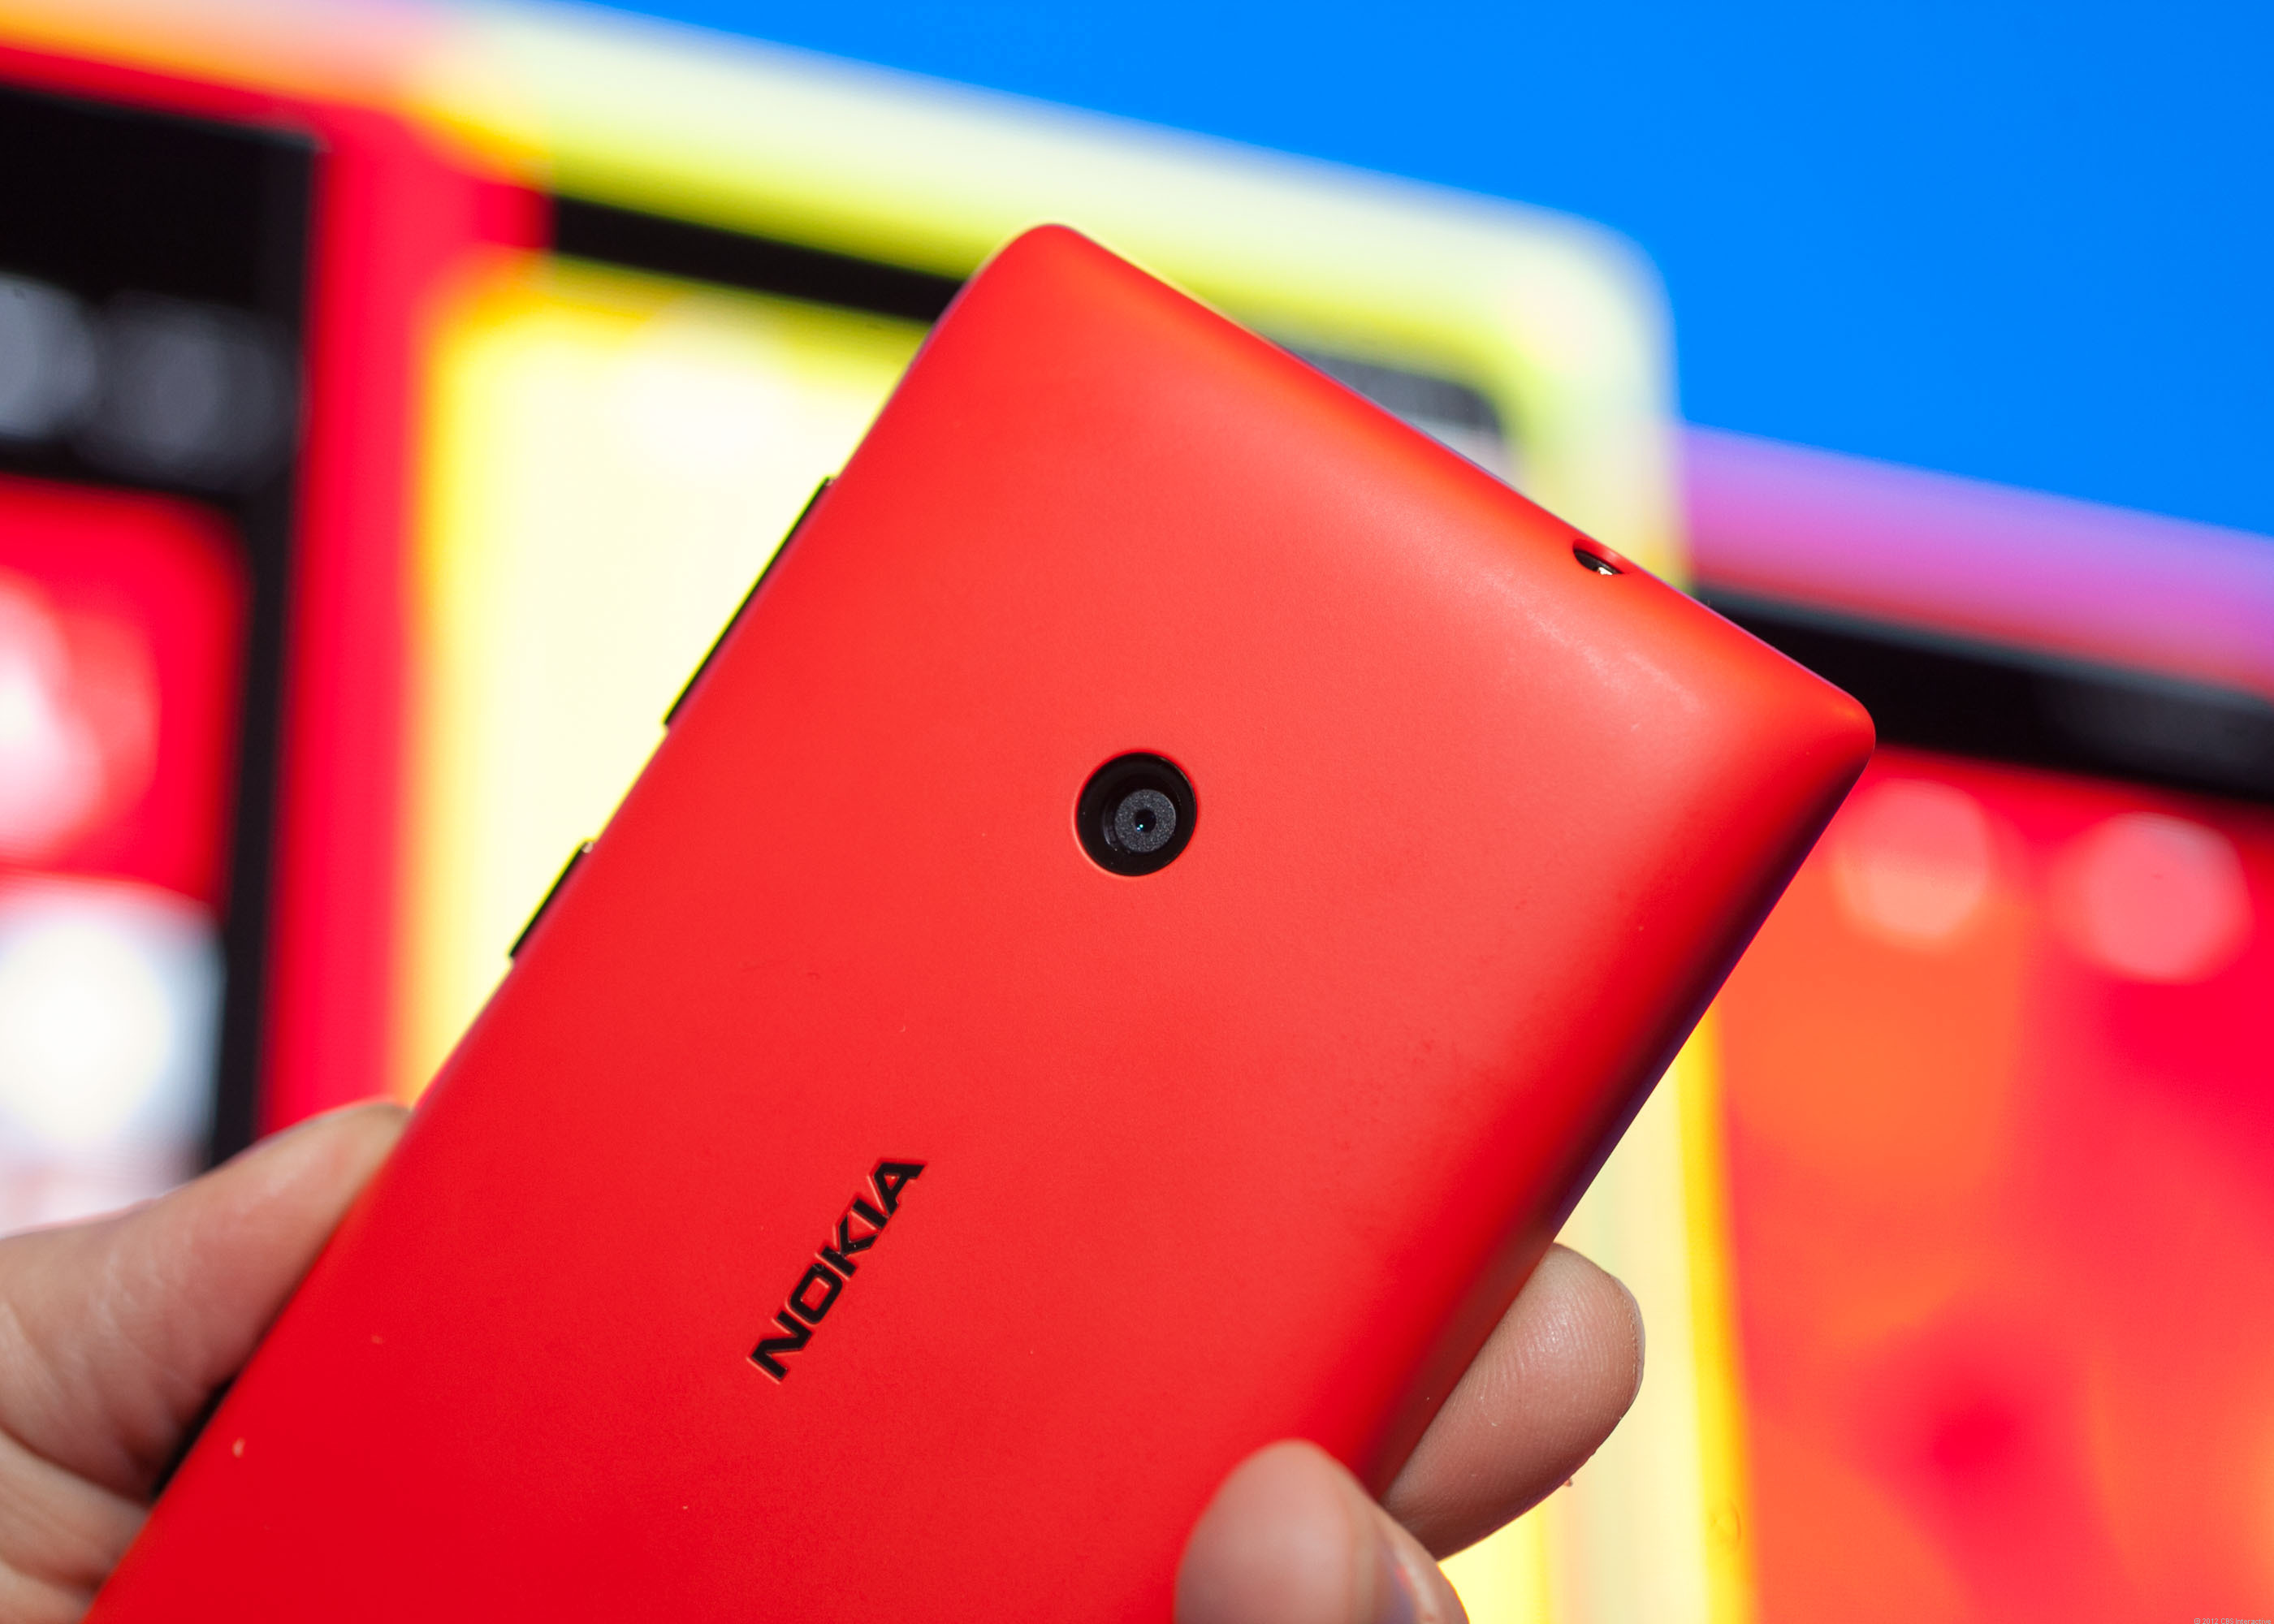 Nokia Lumia Red Color Read Sources Re C